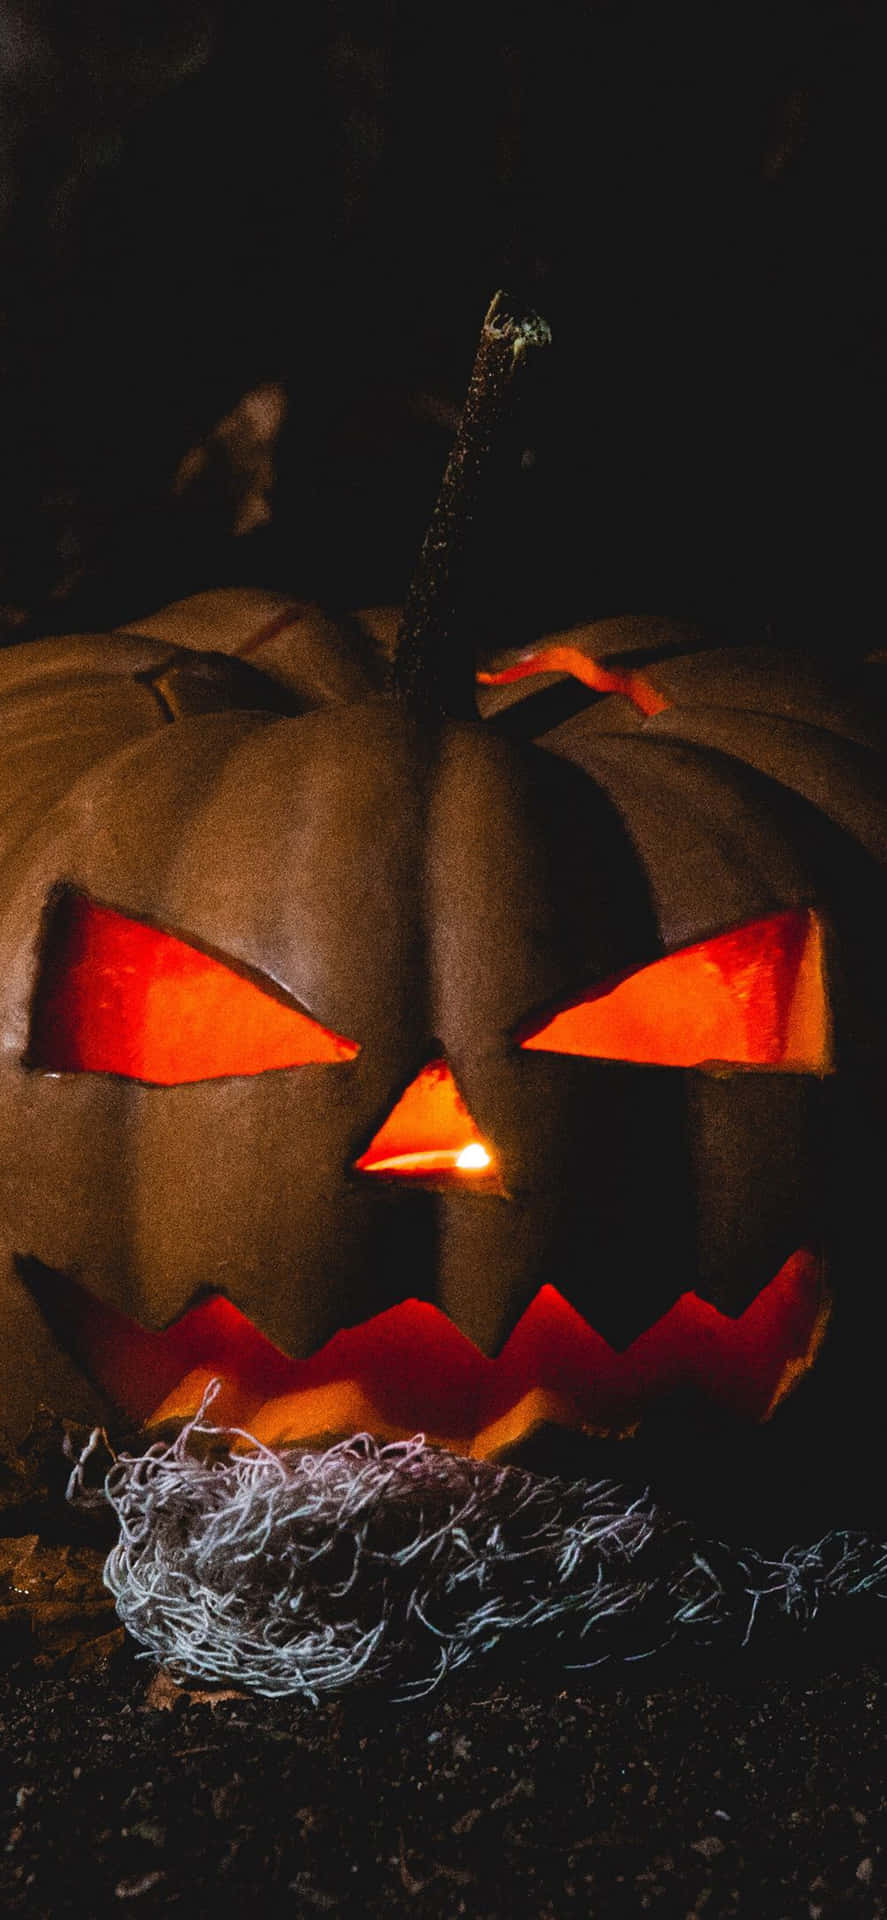 iPhone Halloween Background Of Scary Jack O'Lantern